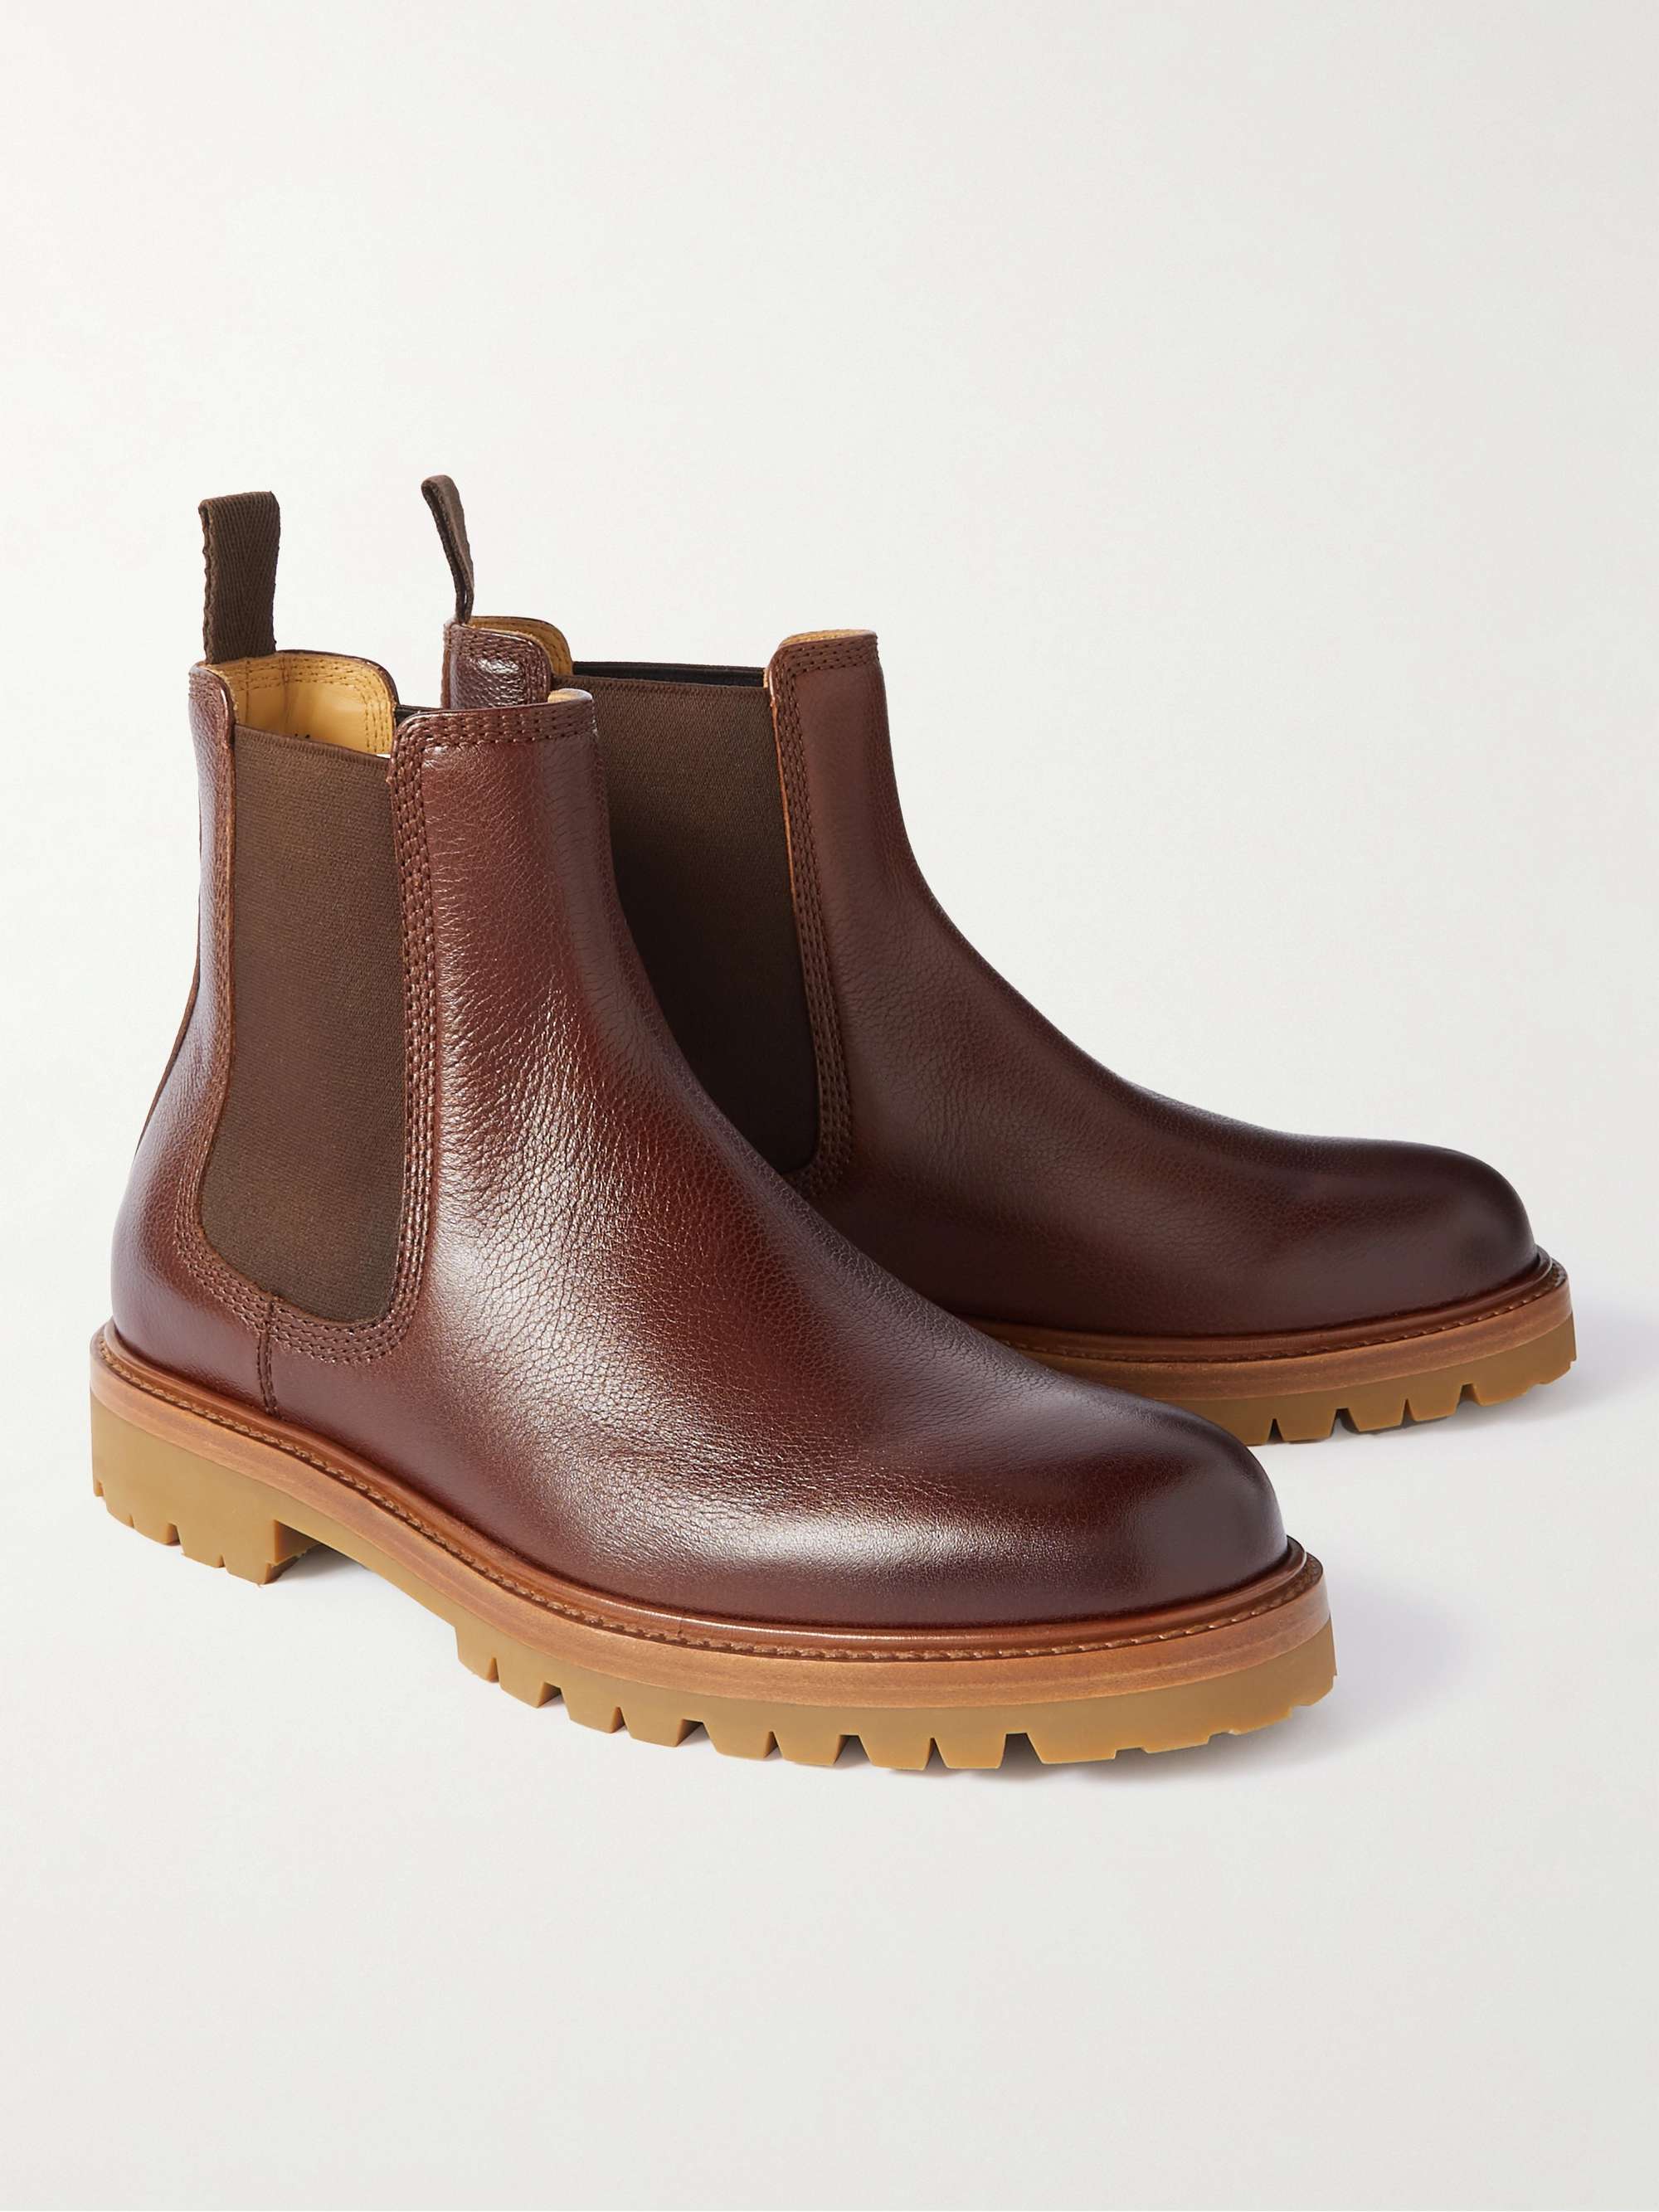 BRUNELLO CUCINELLI Leather Chelsea Boots for Men | MR PORTER